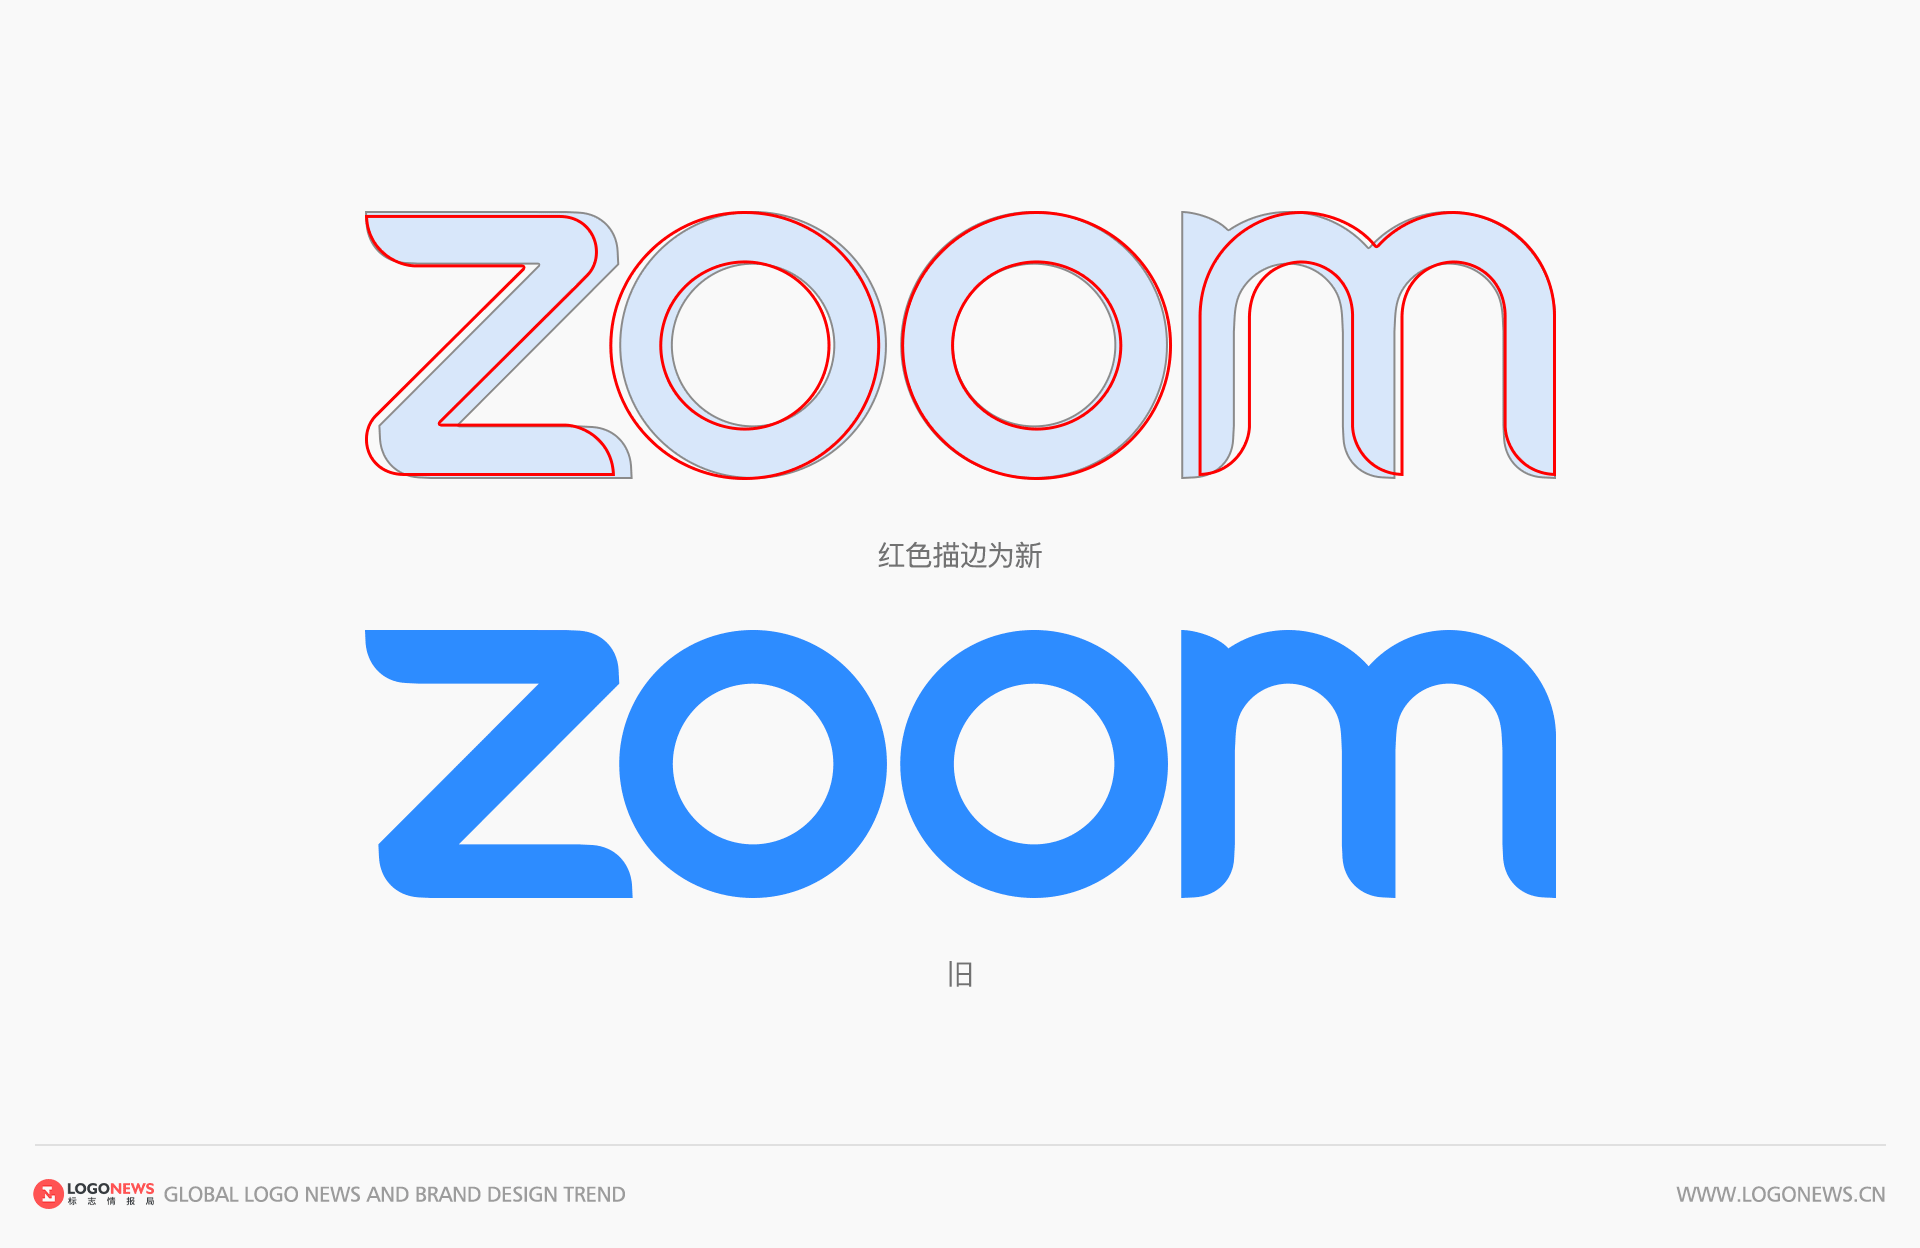 Zoom 更新品牌LOGO，將從視訊應用向大通訊平台轉型 2